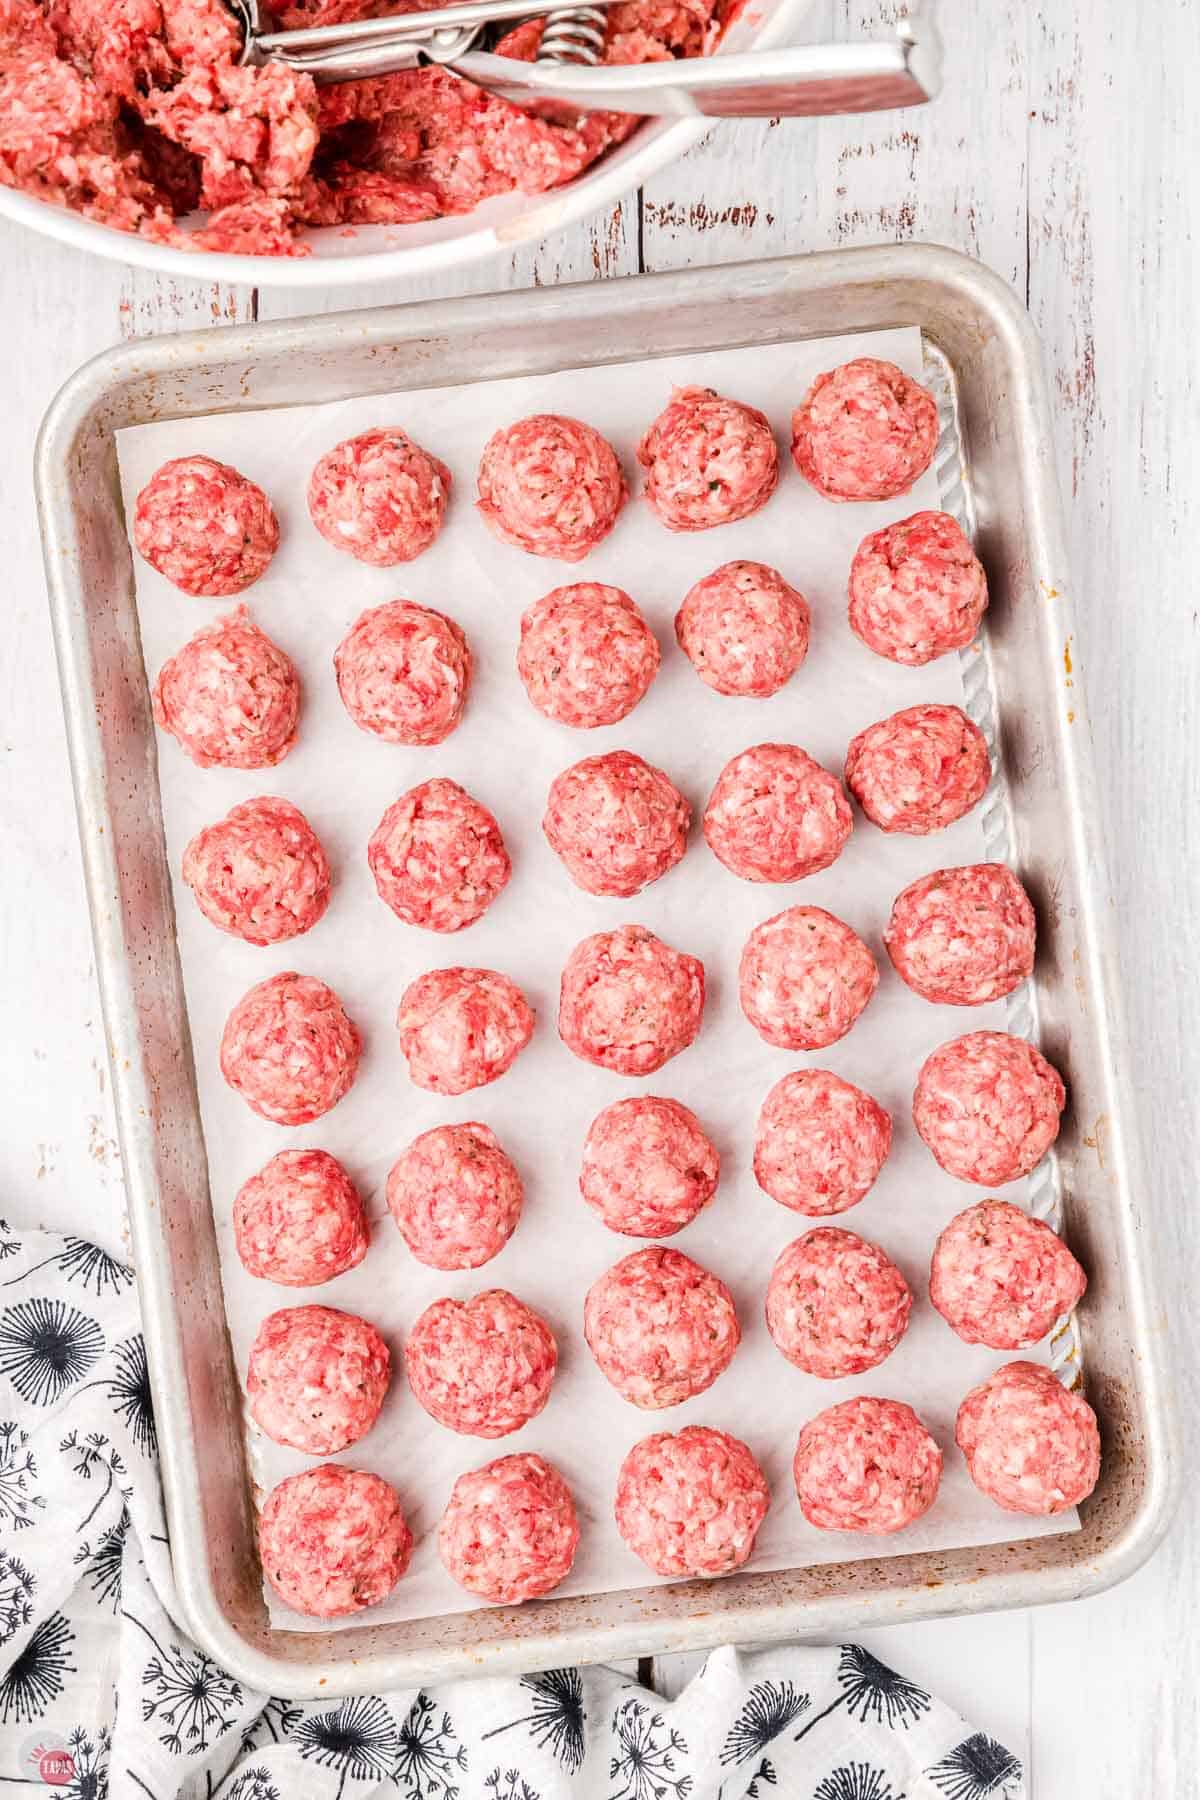 unbaked meatballs on a baking sheet